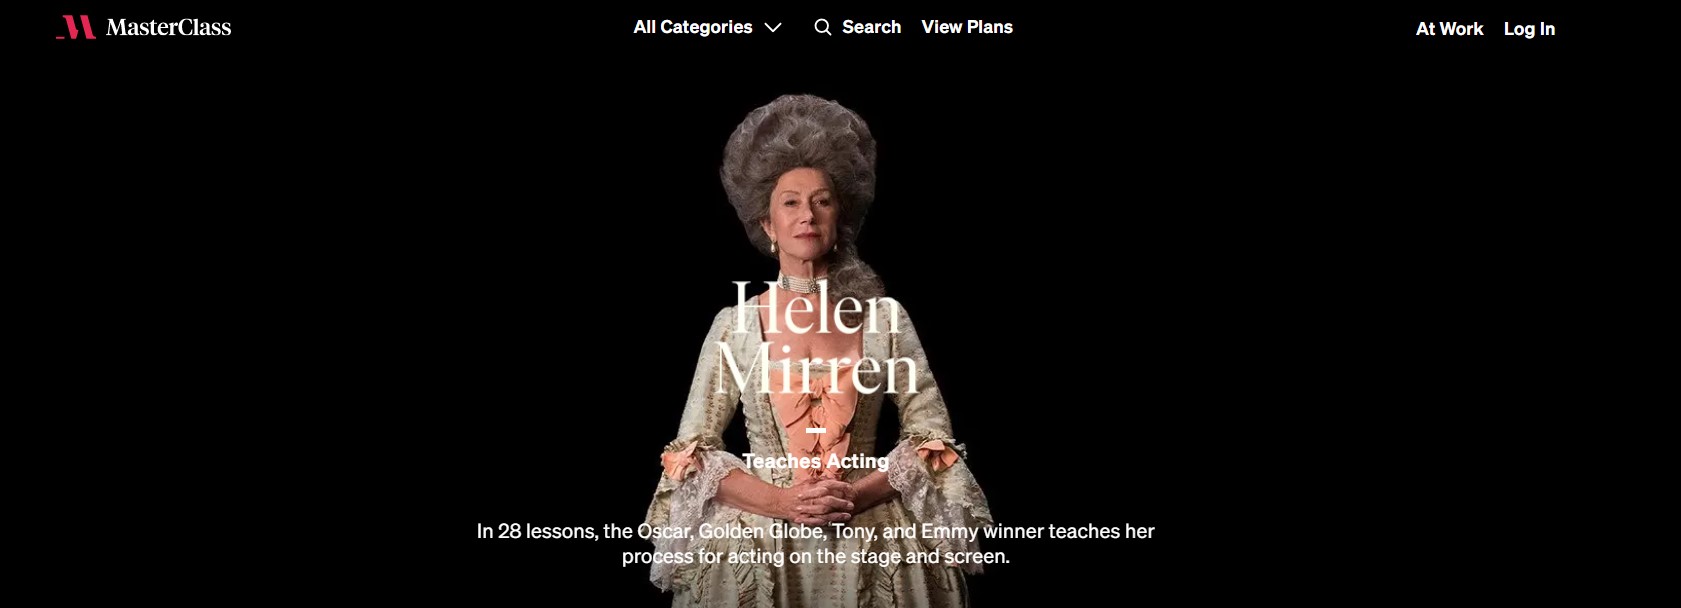 Helen Mirren teaches acting